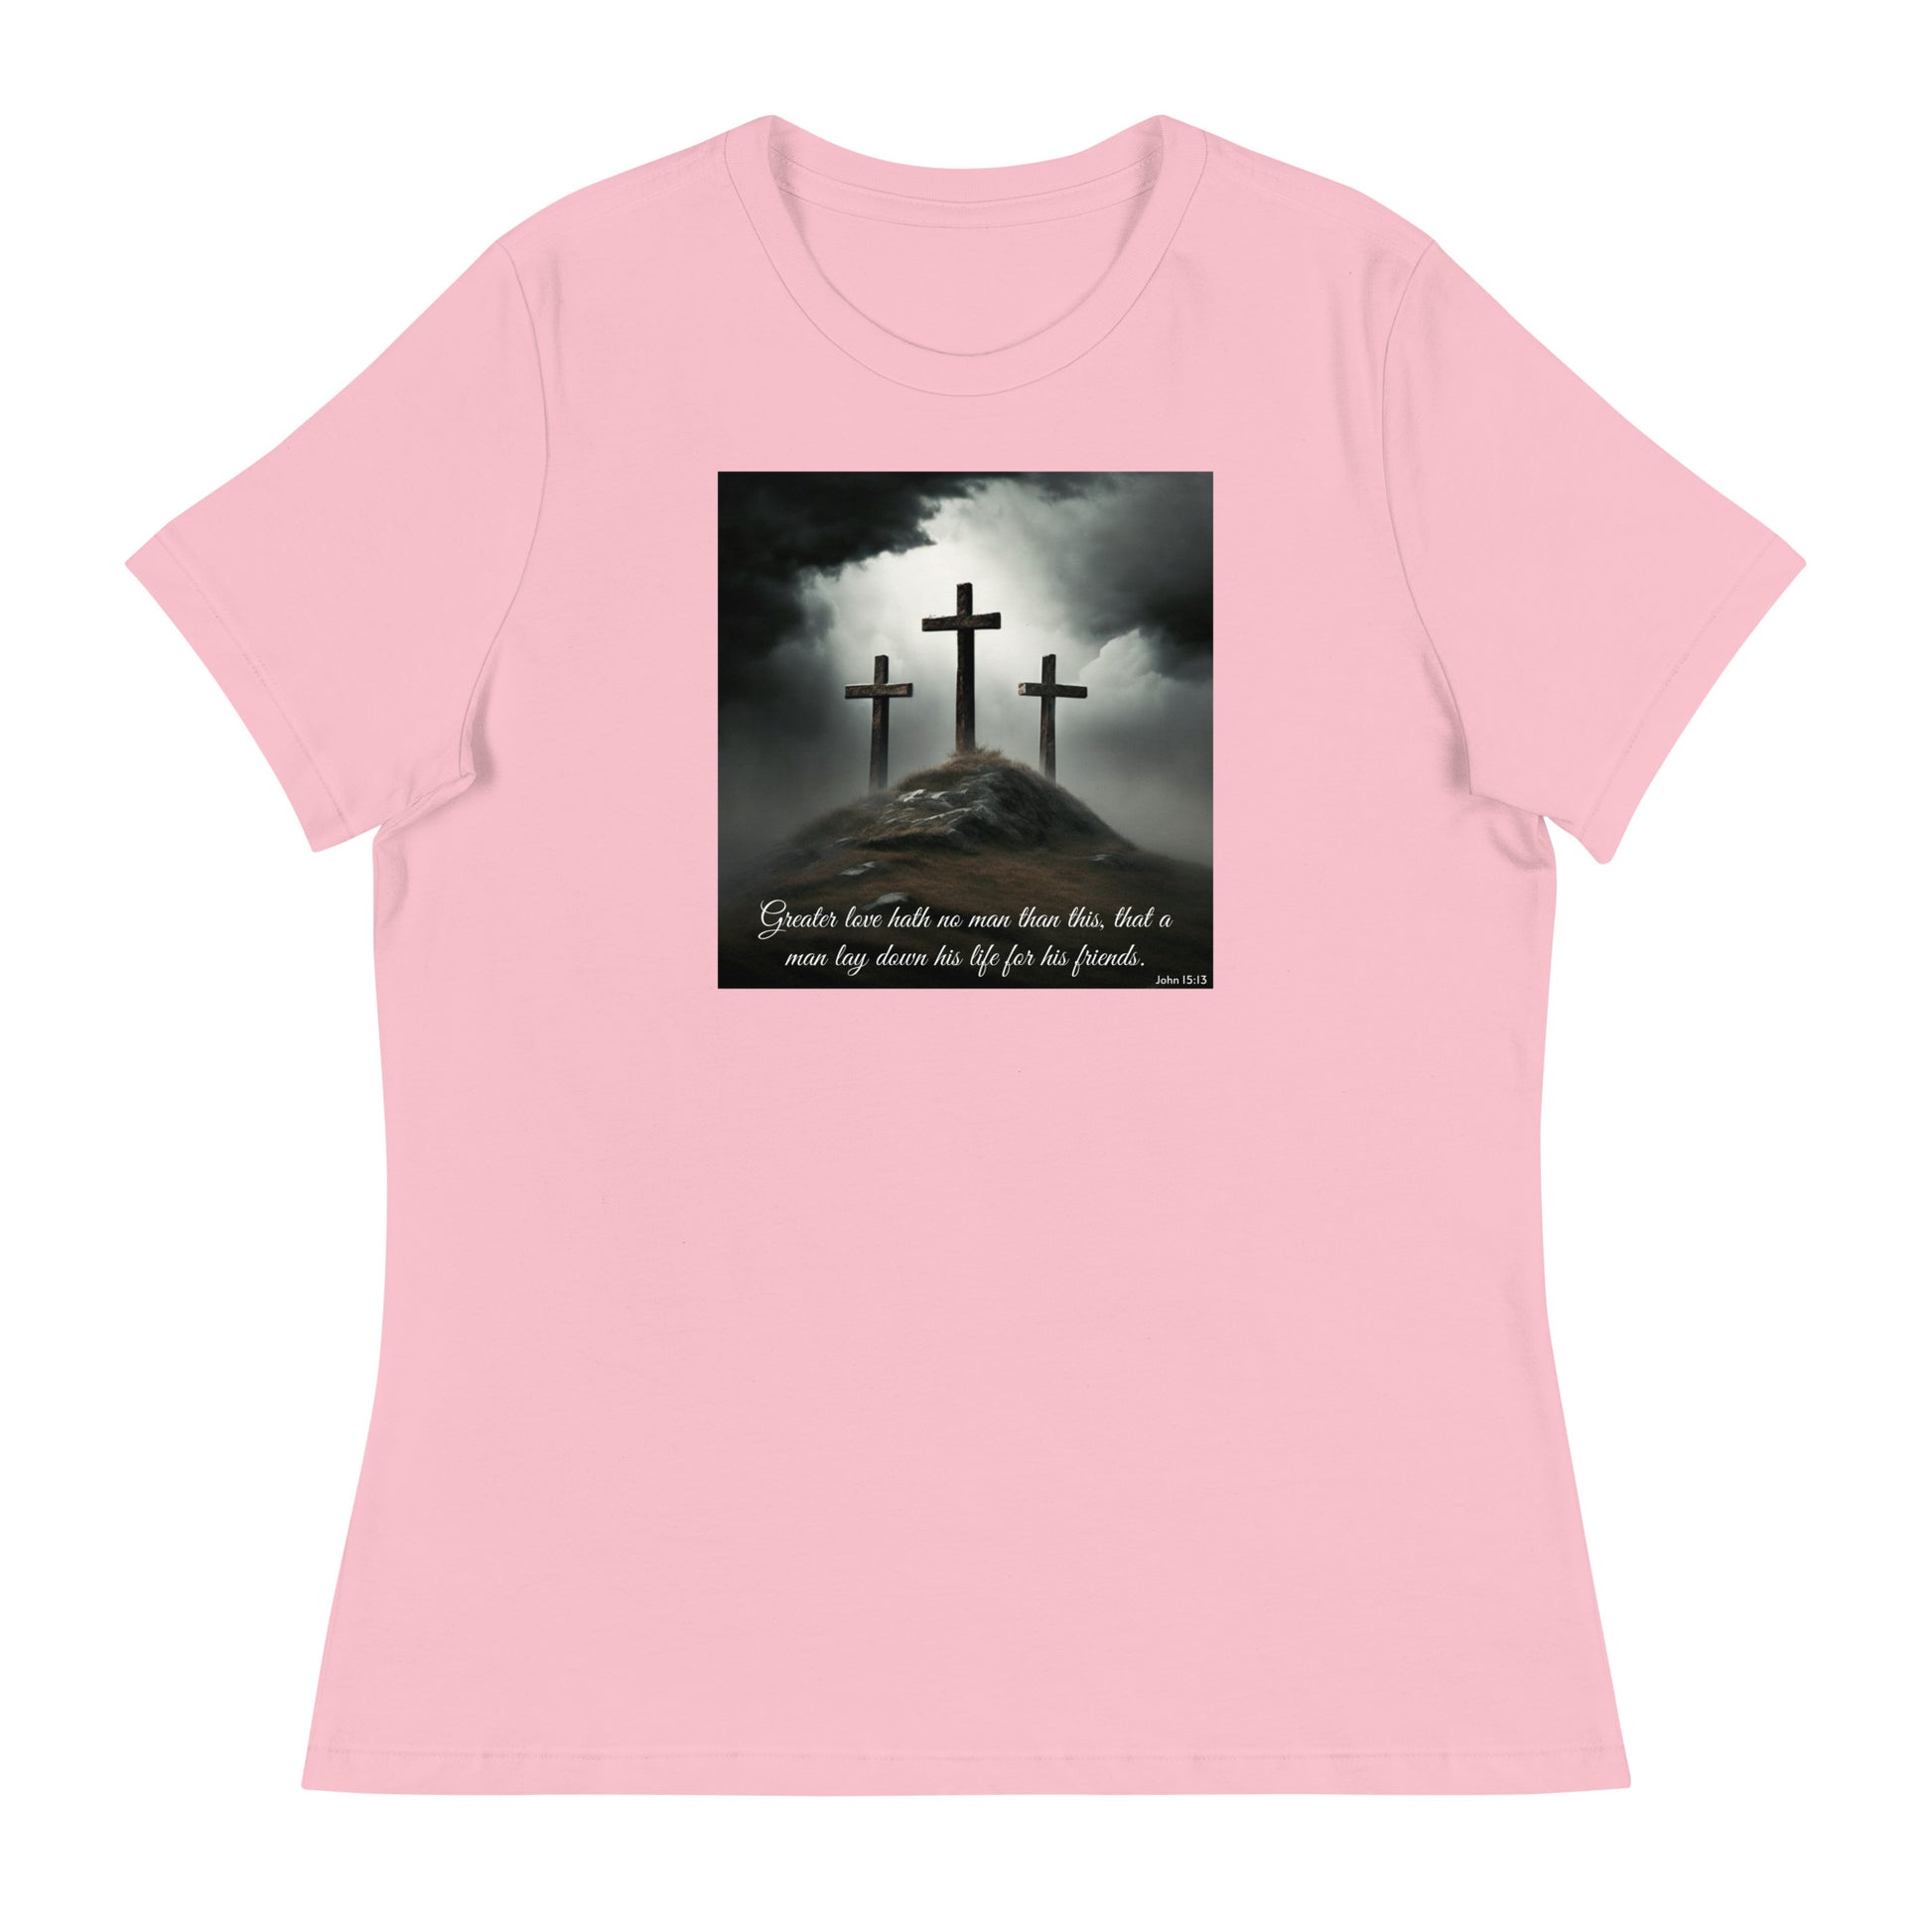 John 15:13 Women's Christian T-Shirt Pink